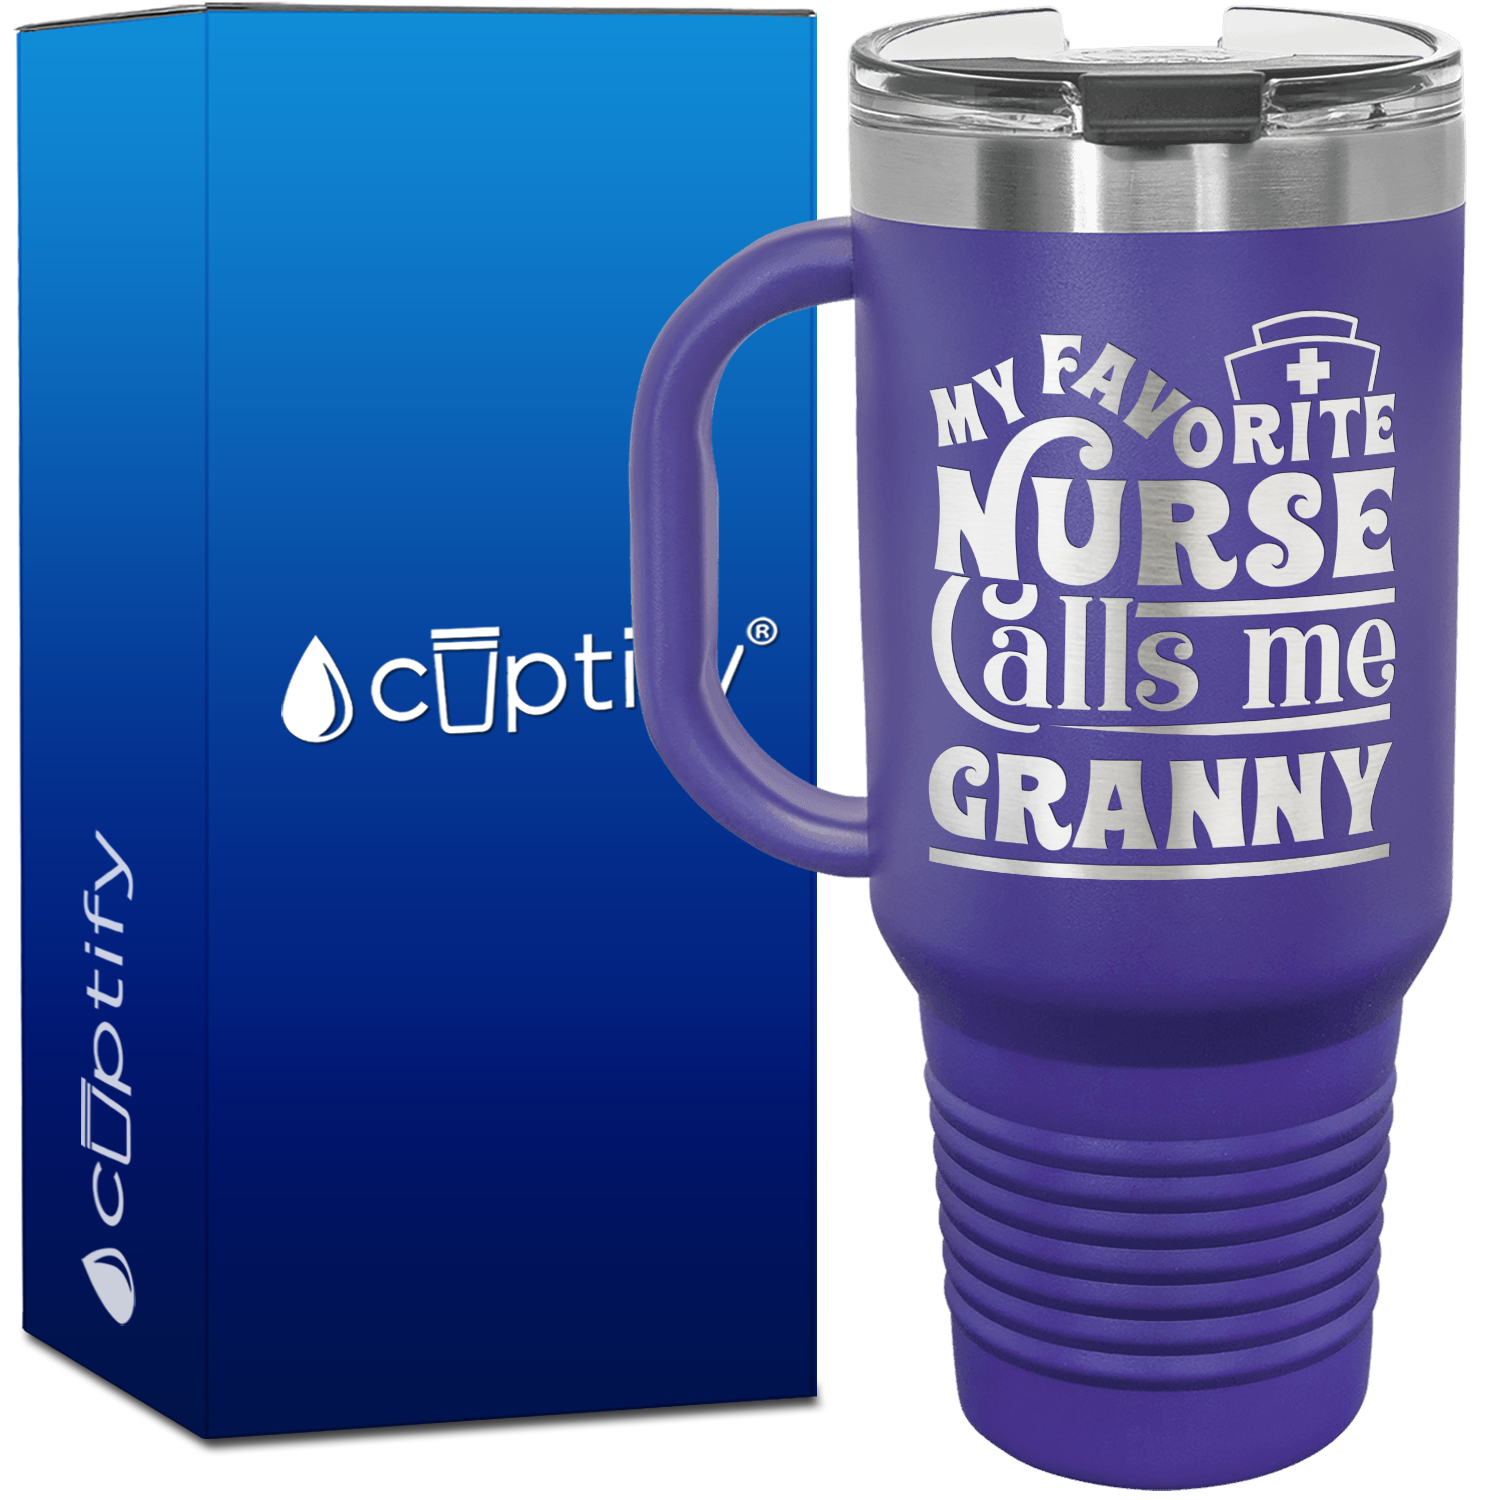 My Favorite Nurse Calls Me Granny 40oz Nurse Travel Mug